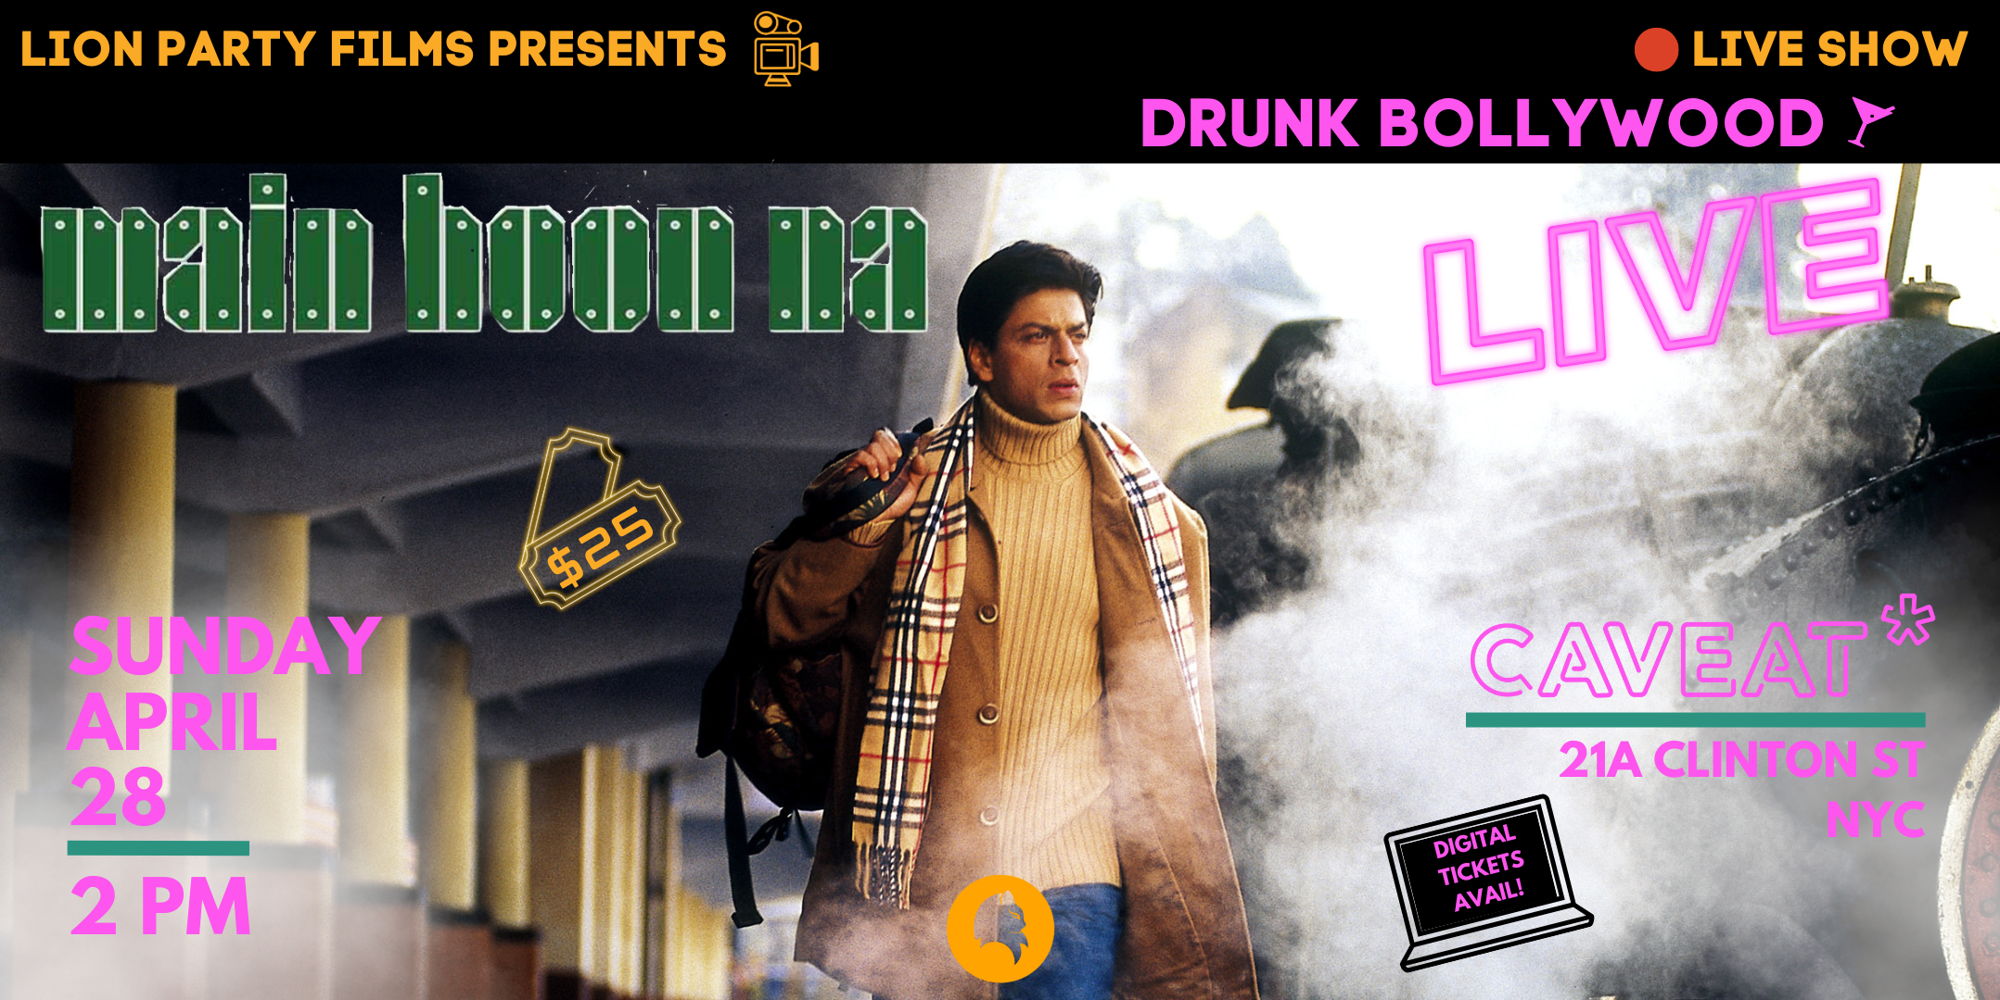 DRUNK BOLLYWOOD LIVE! promotional image